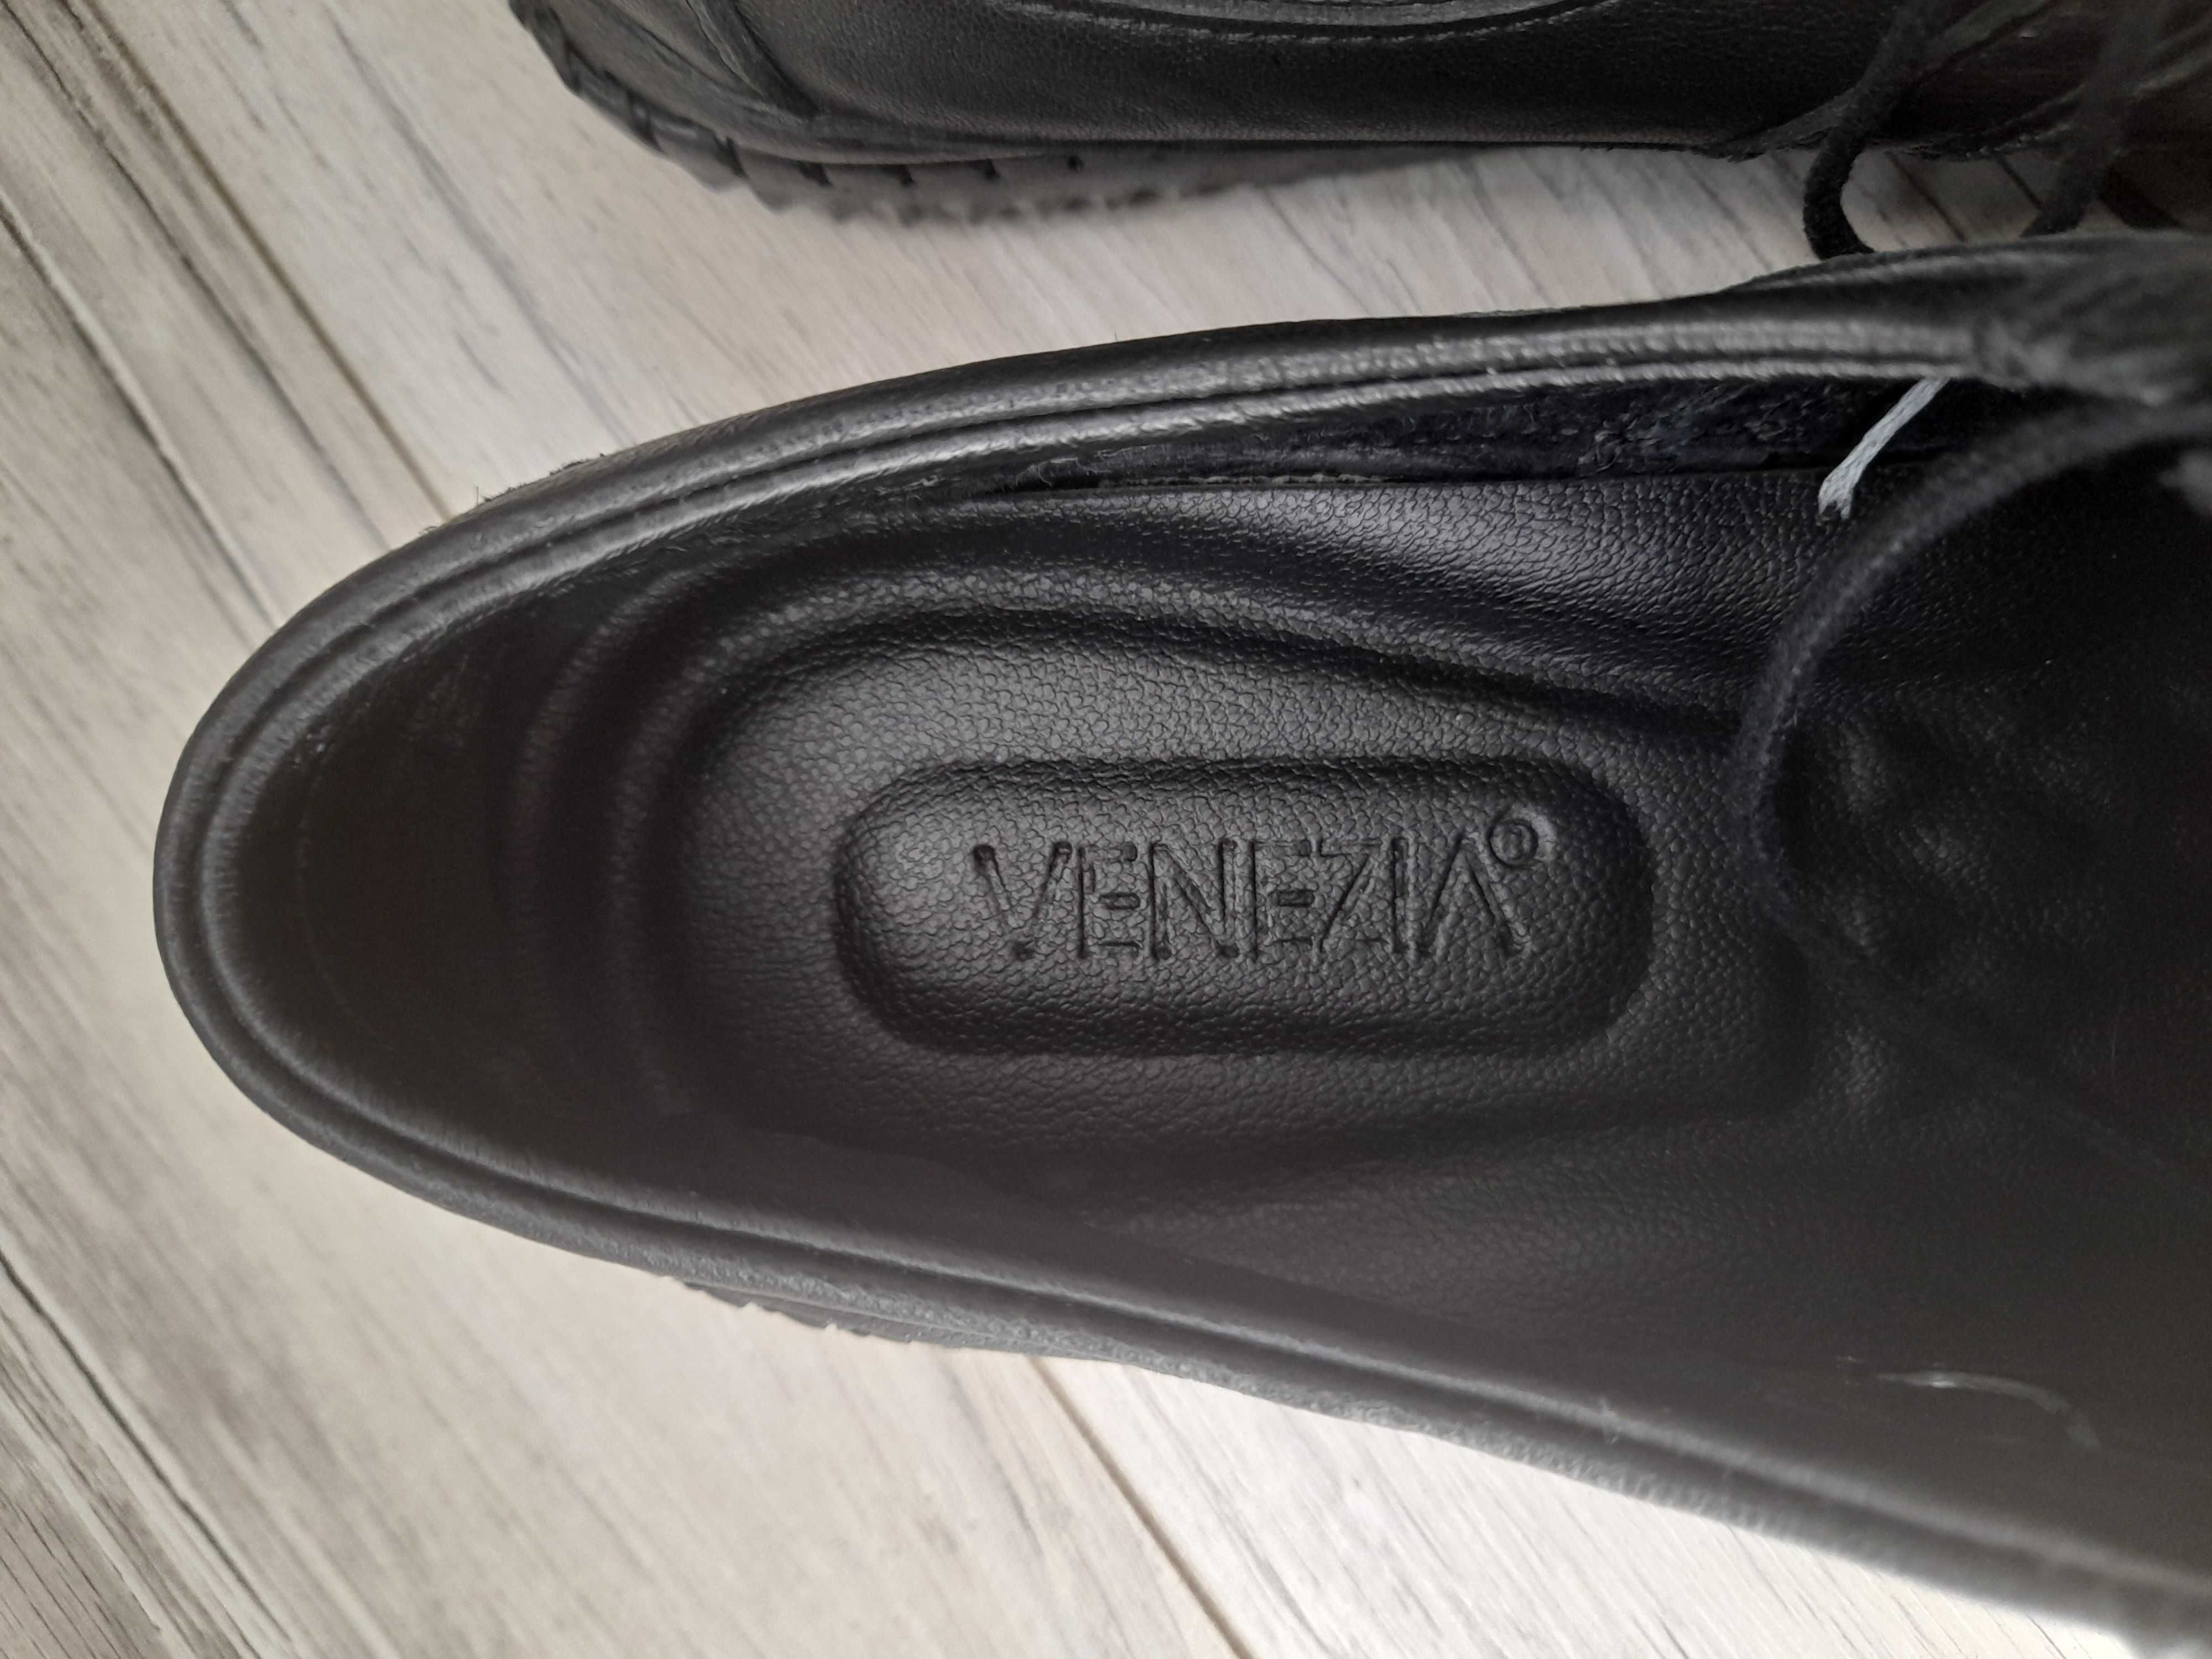 Buty skorzane Venezia bardzo lekkie